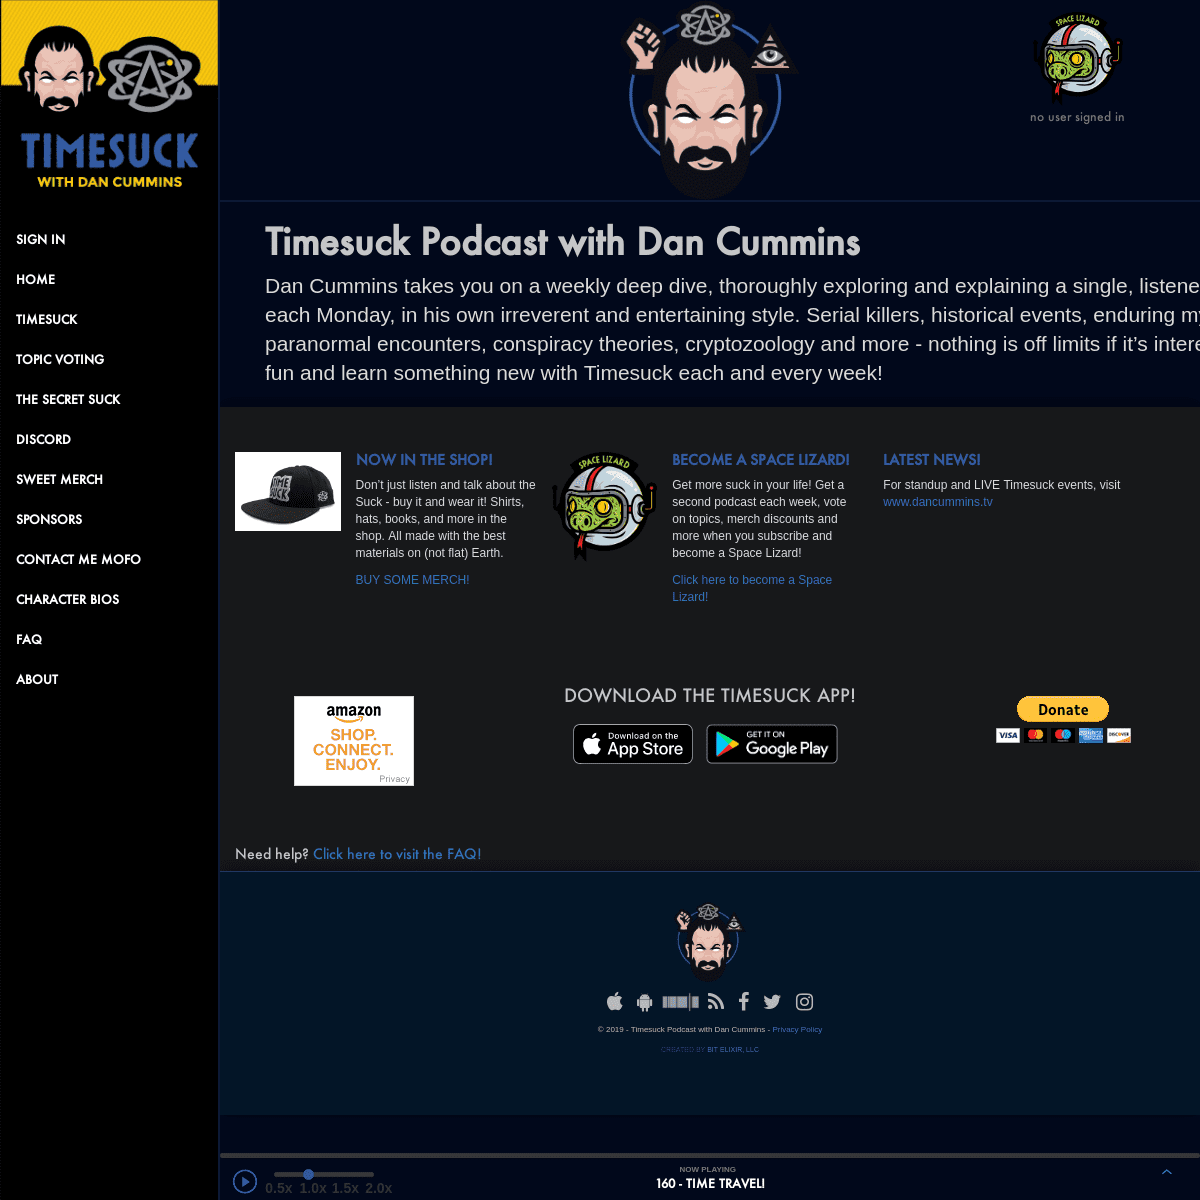 A complete backup of timesuckpodcast.com